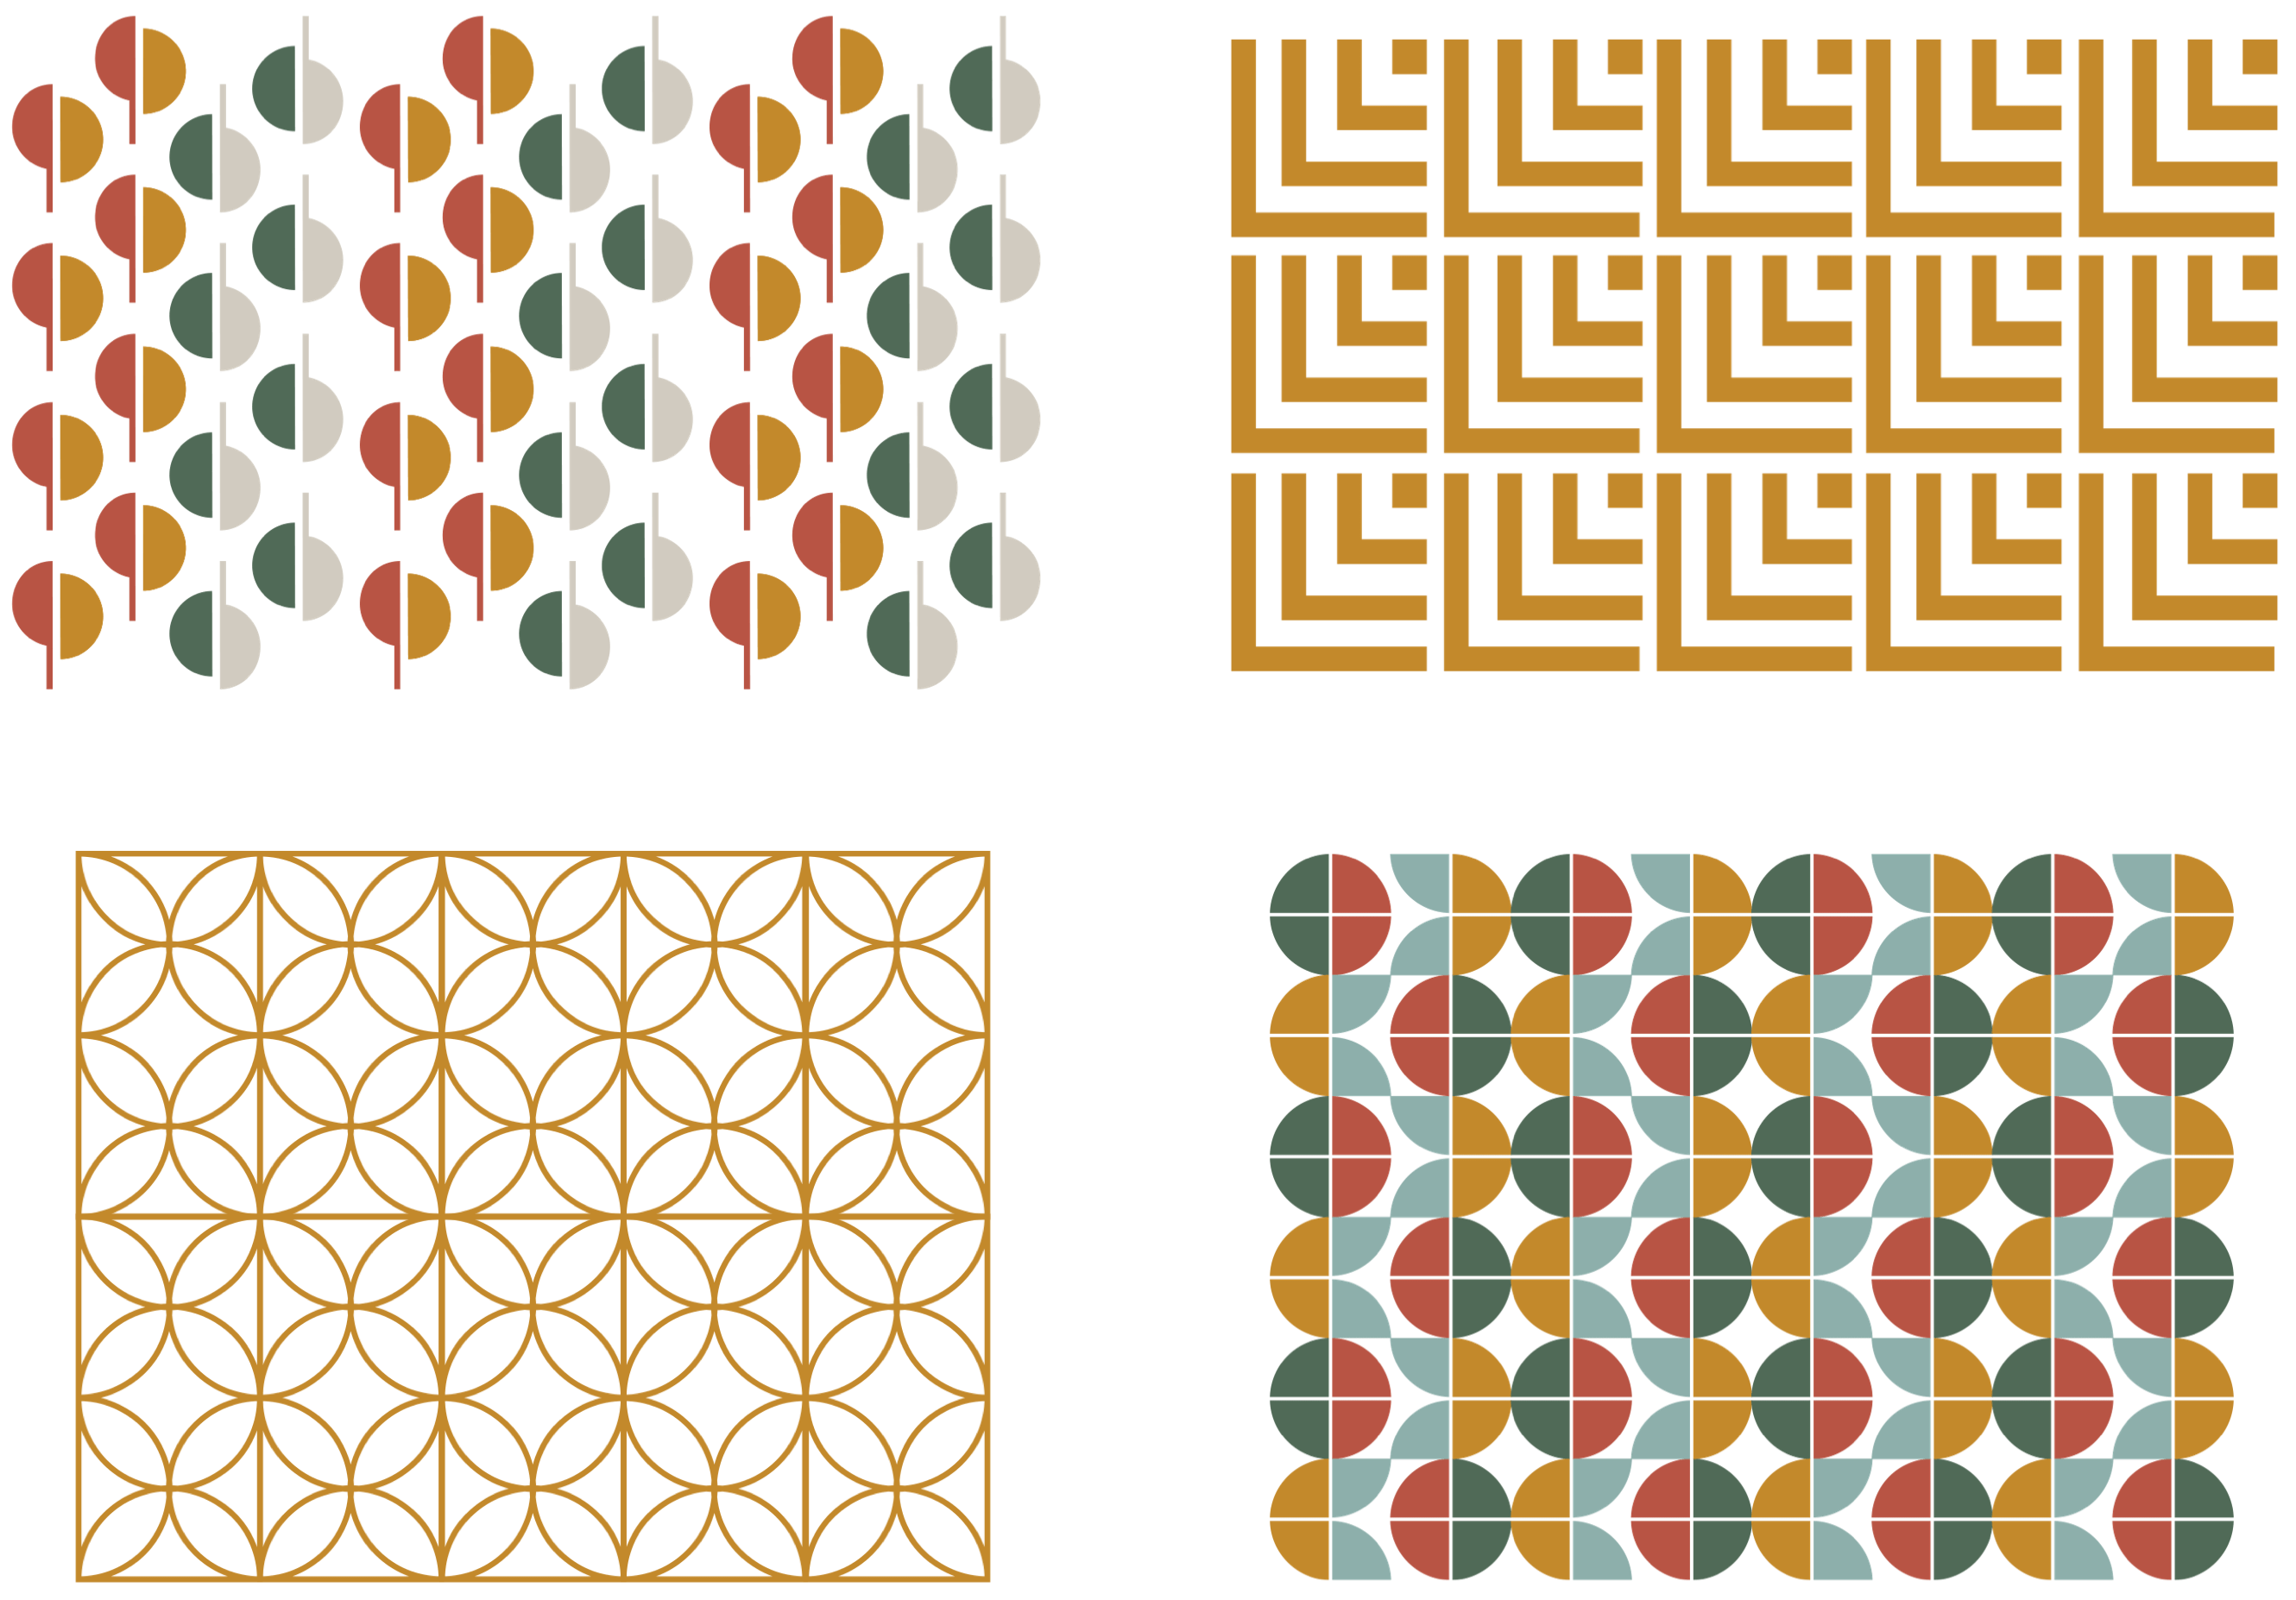 Broadstone patterns